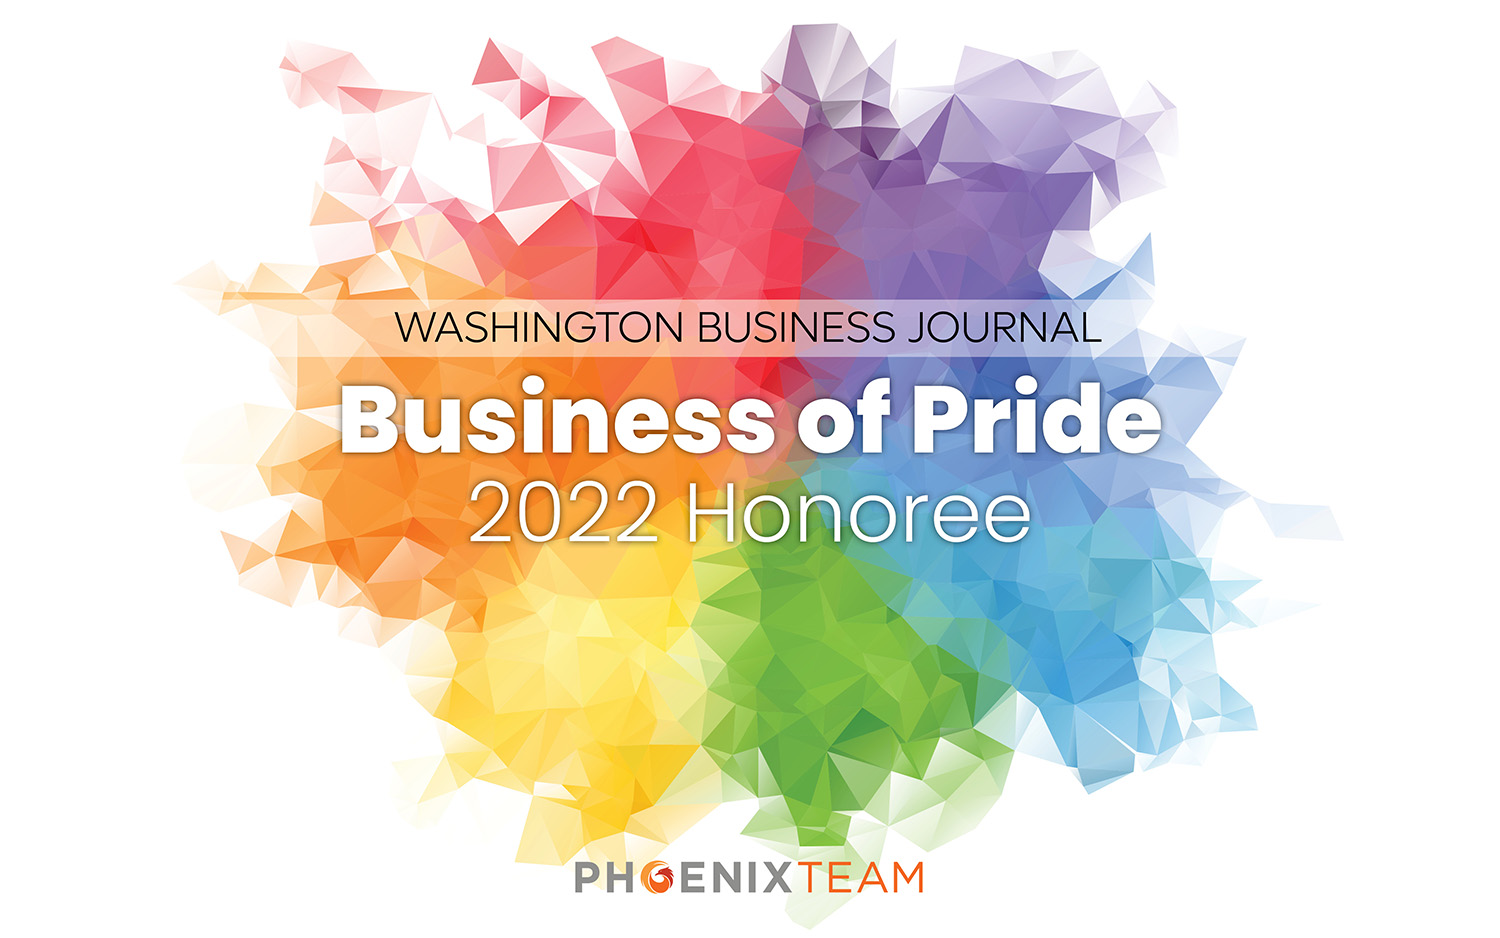 PhoenixTeam WBJ Business of Pride Web